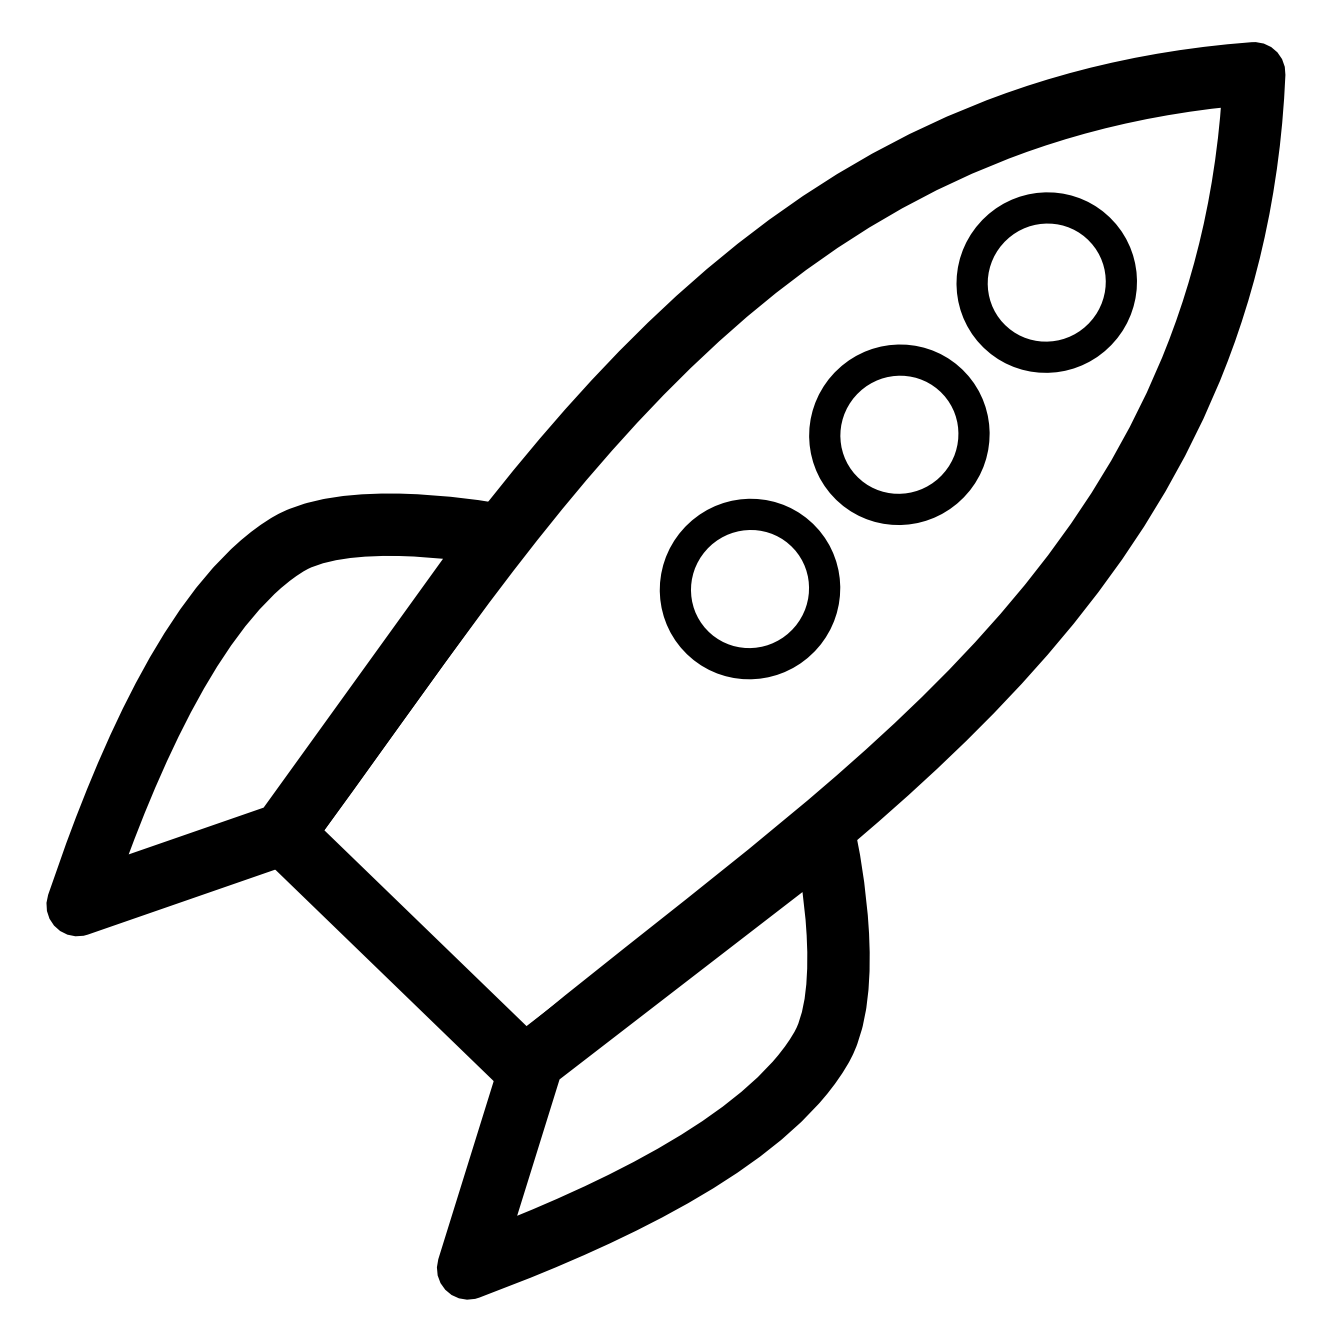 Rocket clip art free